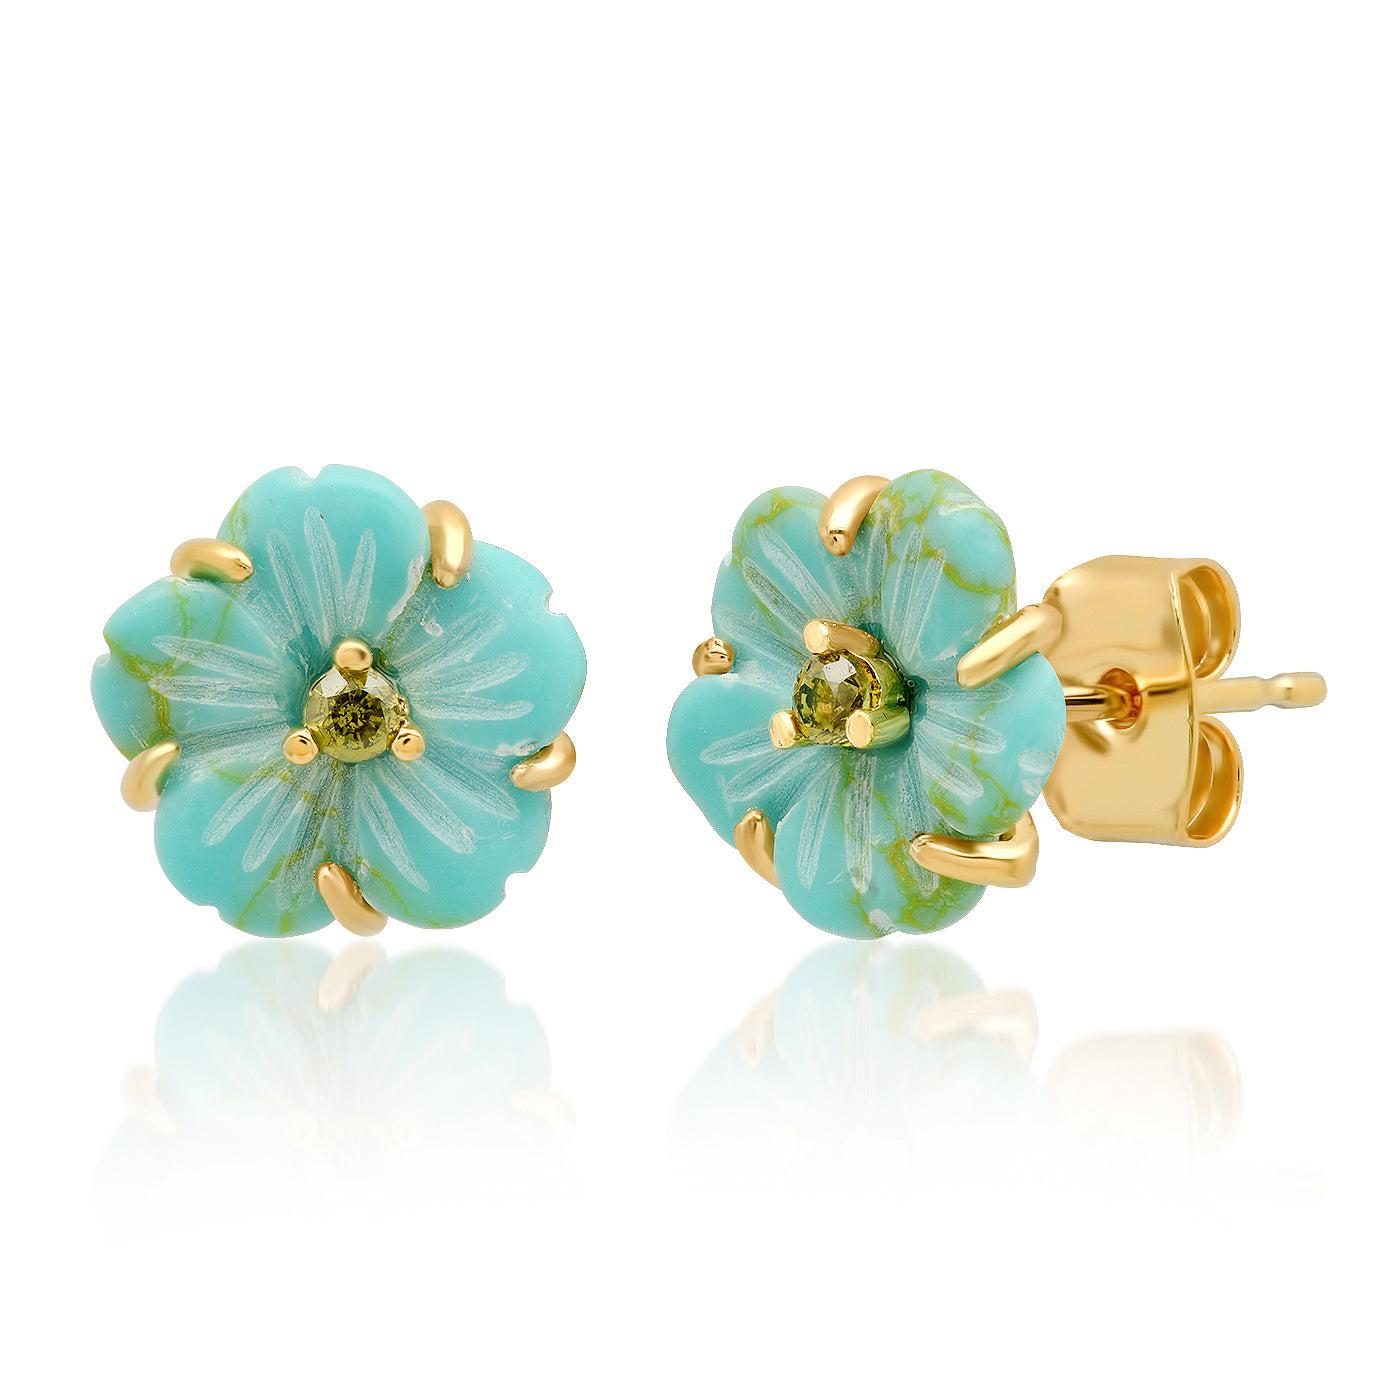 Tai Carved Flower Earrings - 2 Colors